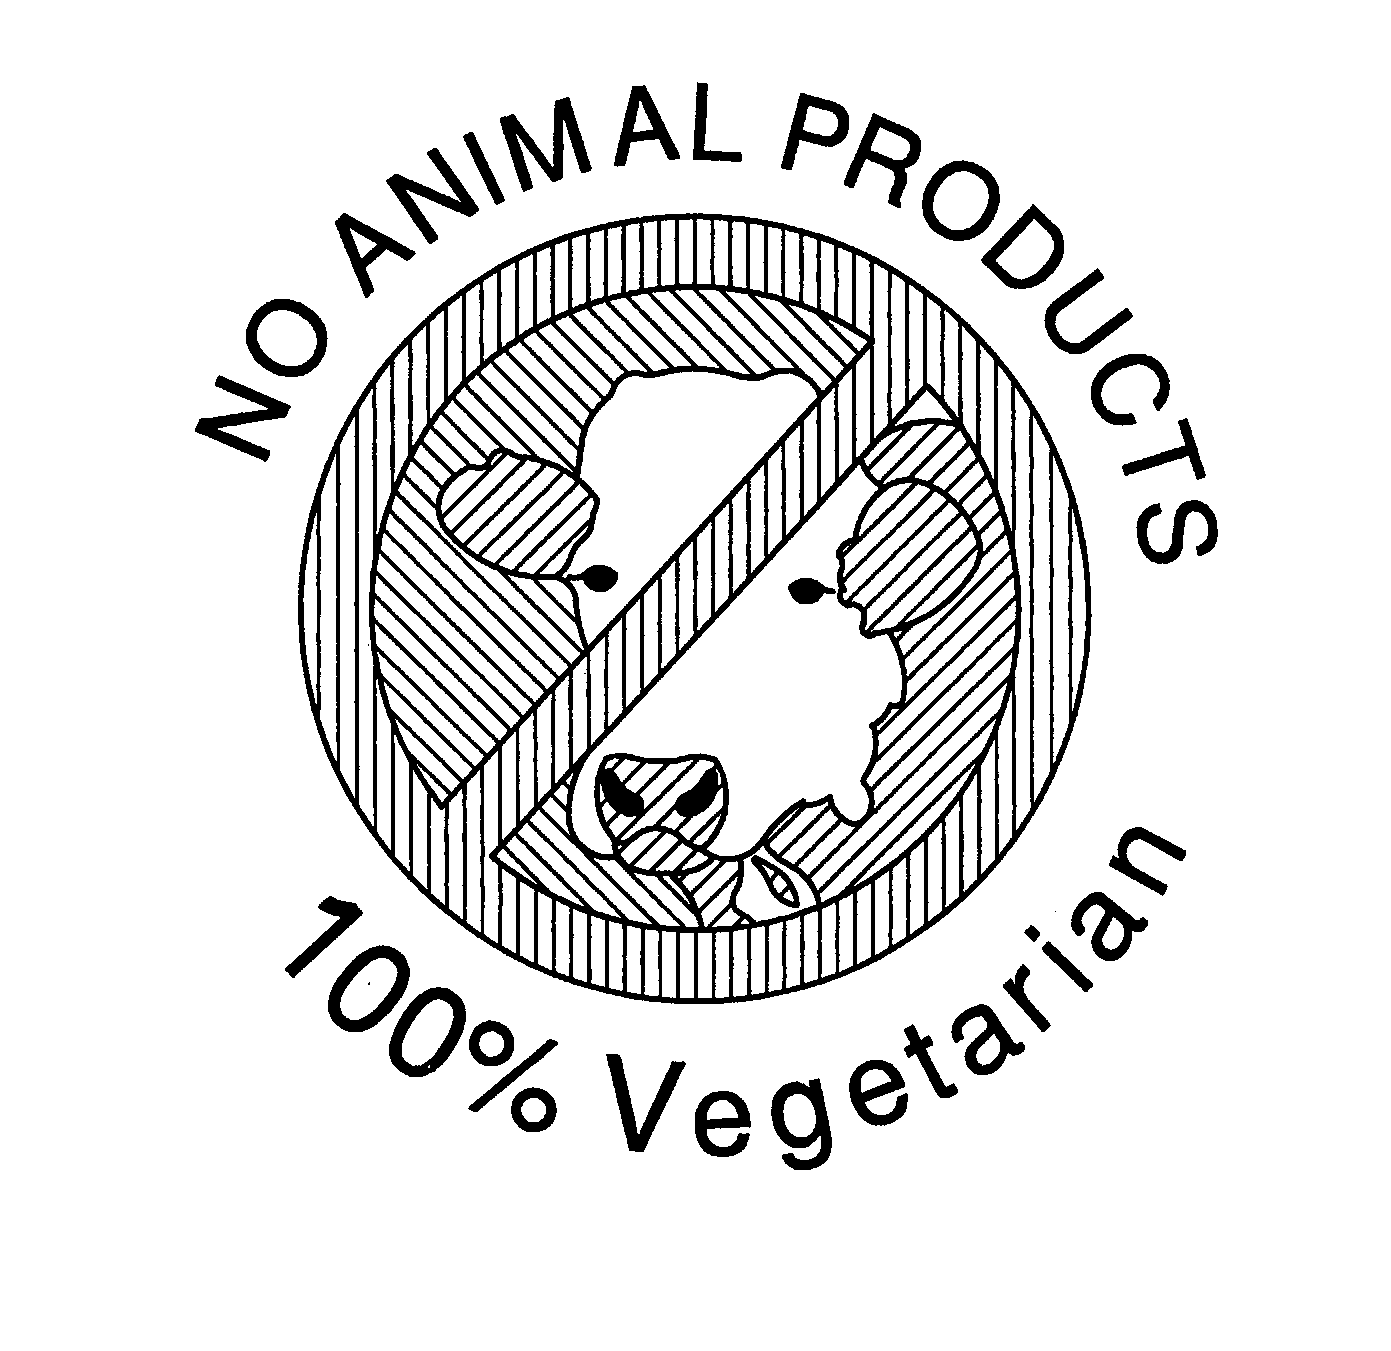 NO ANIMAL PRODUCTS 100% VEGETARIAN